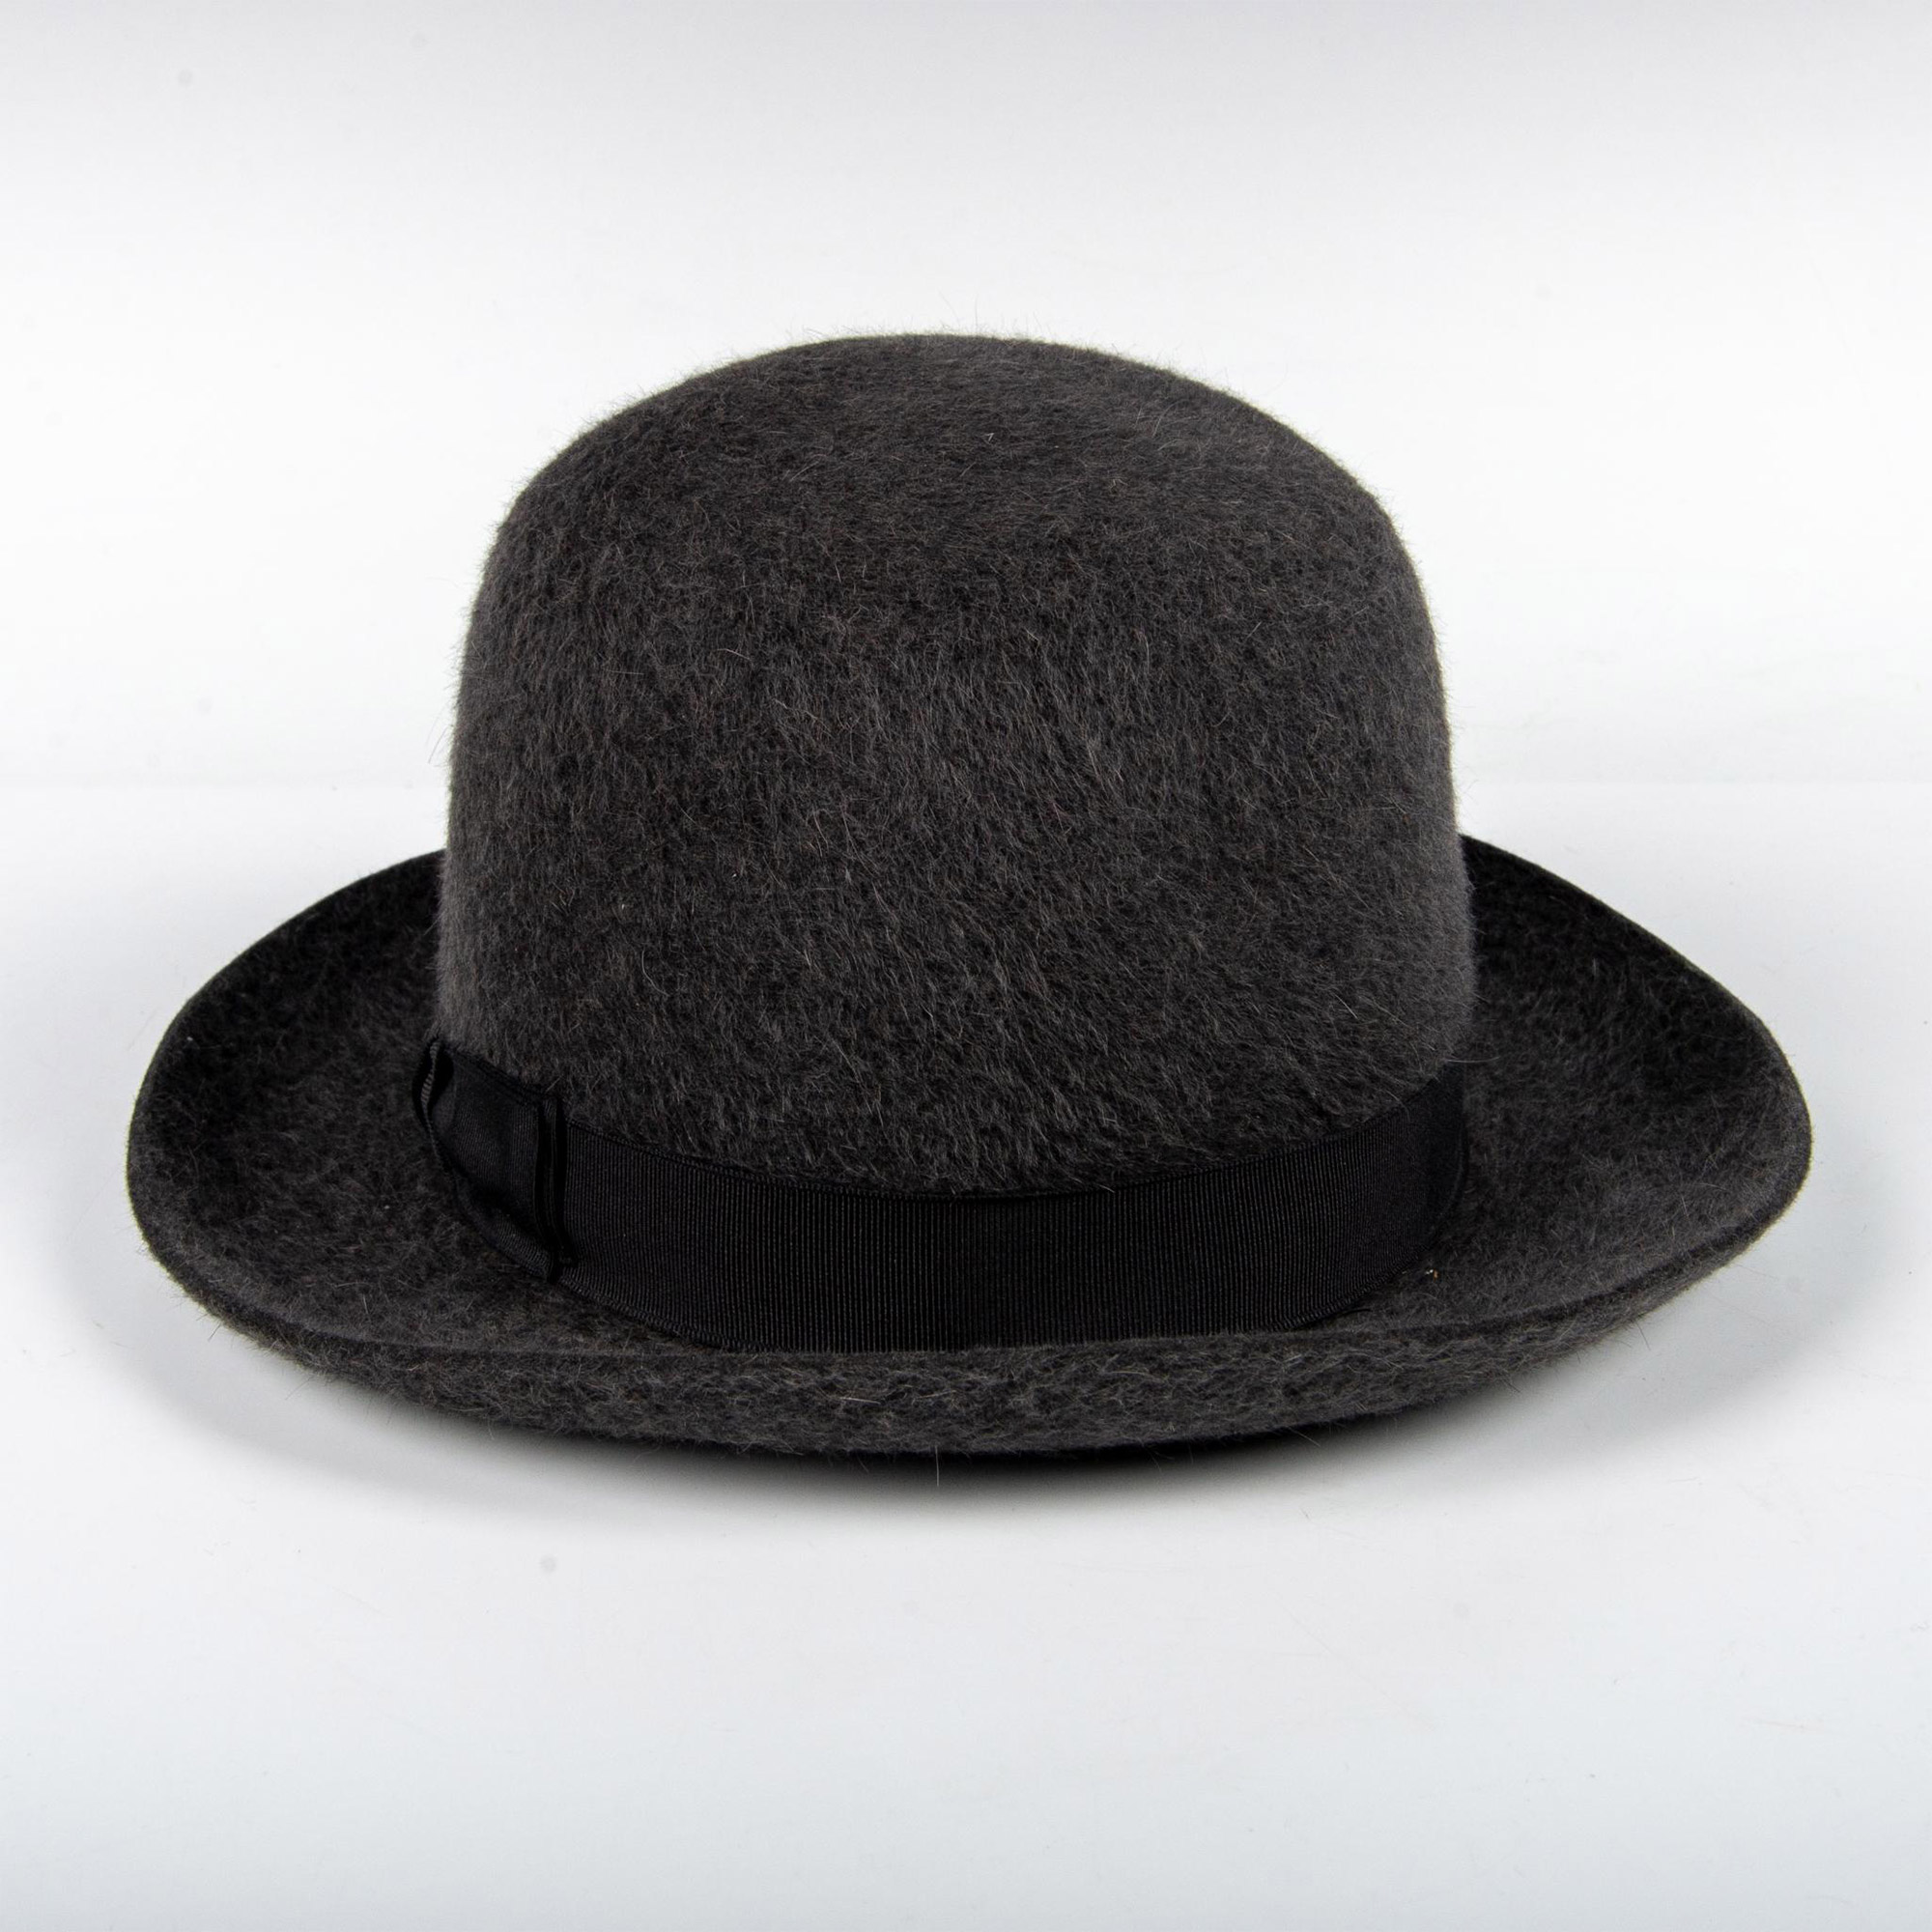 Chapeaux MOTSCH for Hermes, Paris, Merano Wool Grey Hat - Image 7 of 8